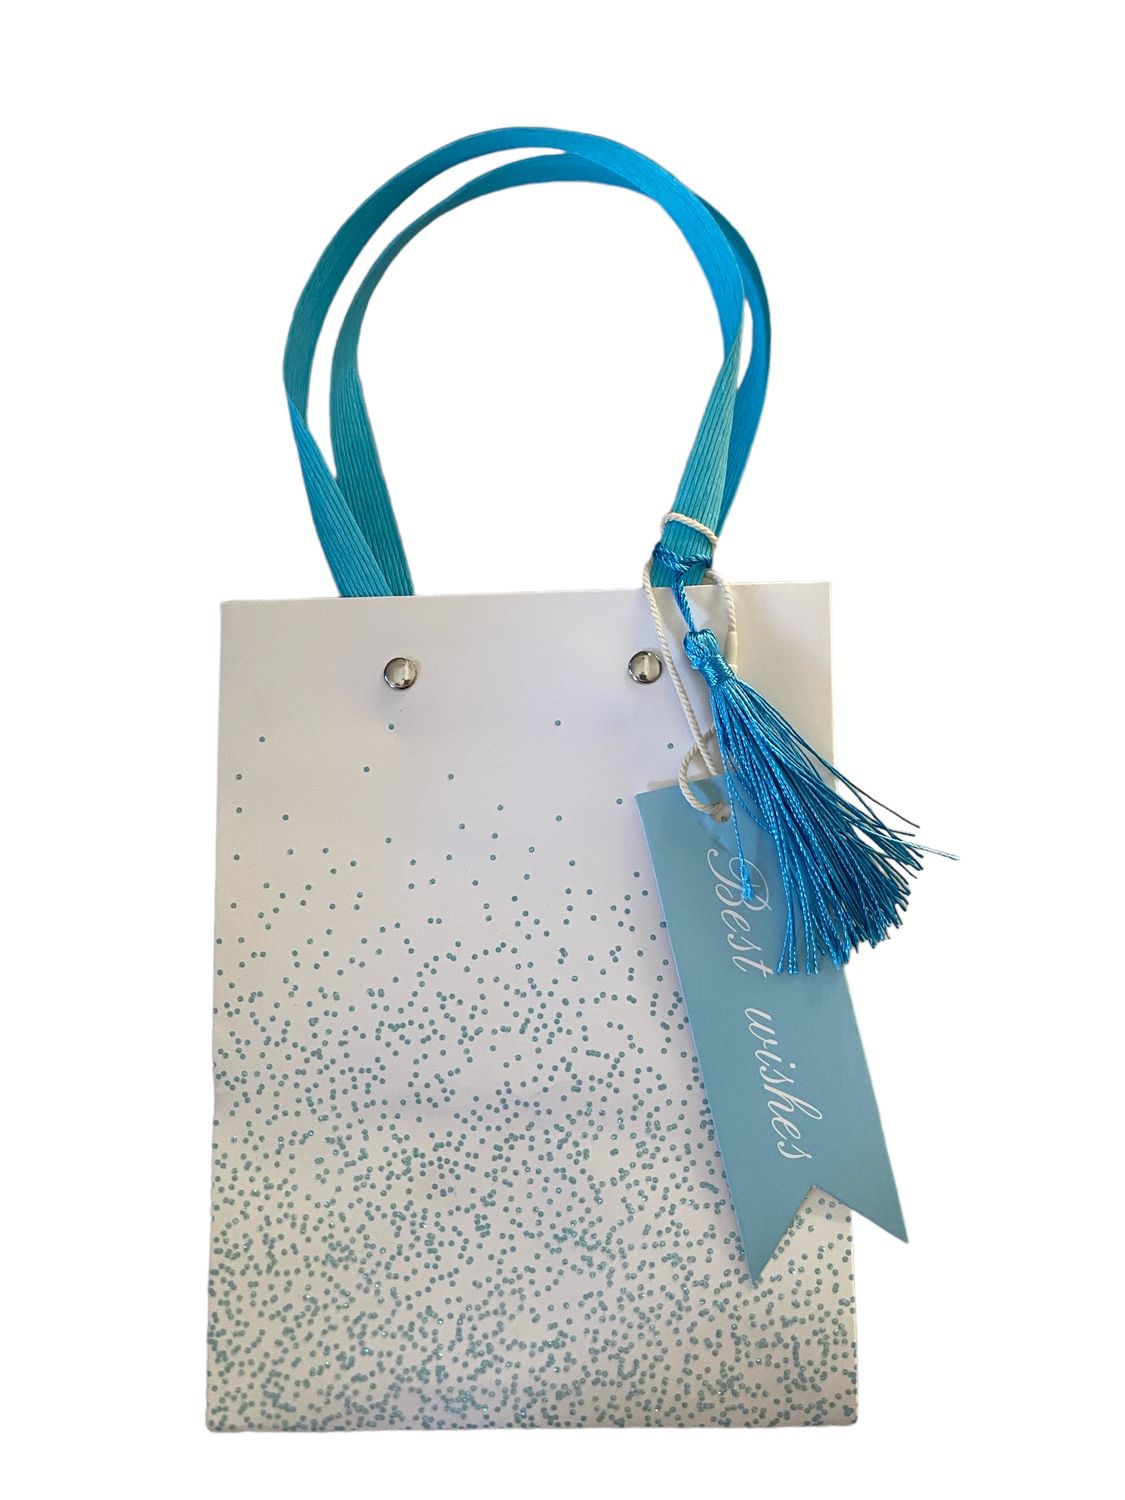 Best Wish White with Blue Glitter Medium Gift Bag PK3 (R19.50 Each)